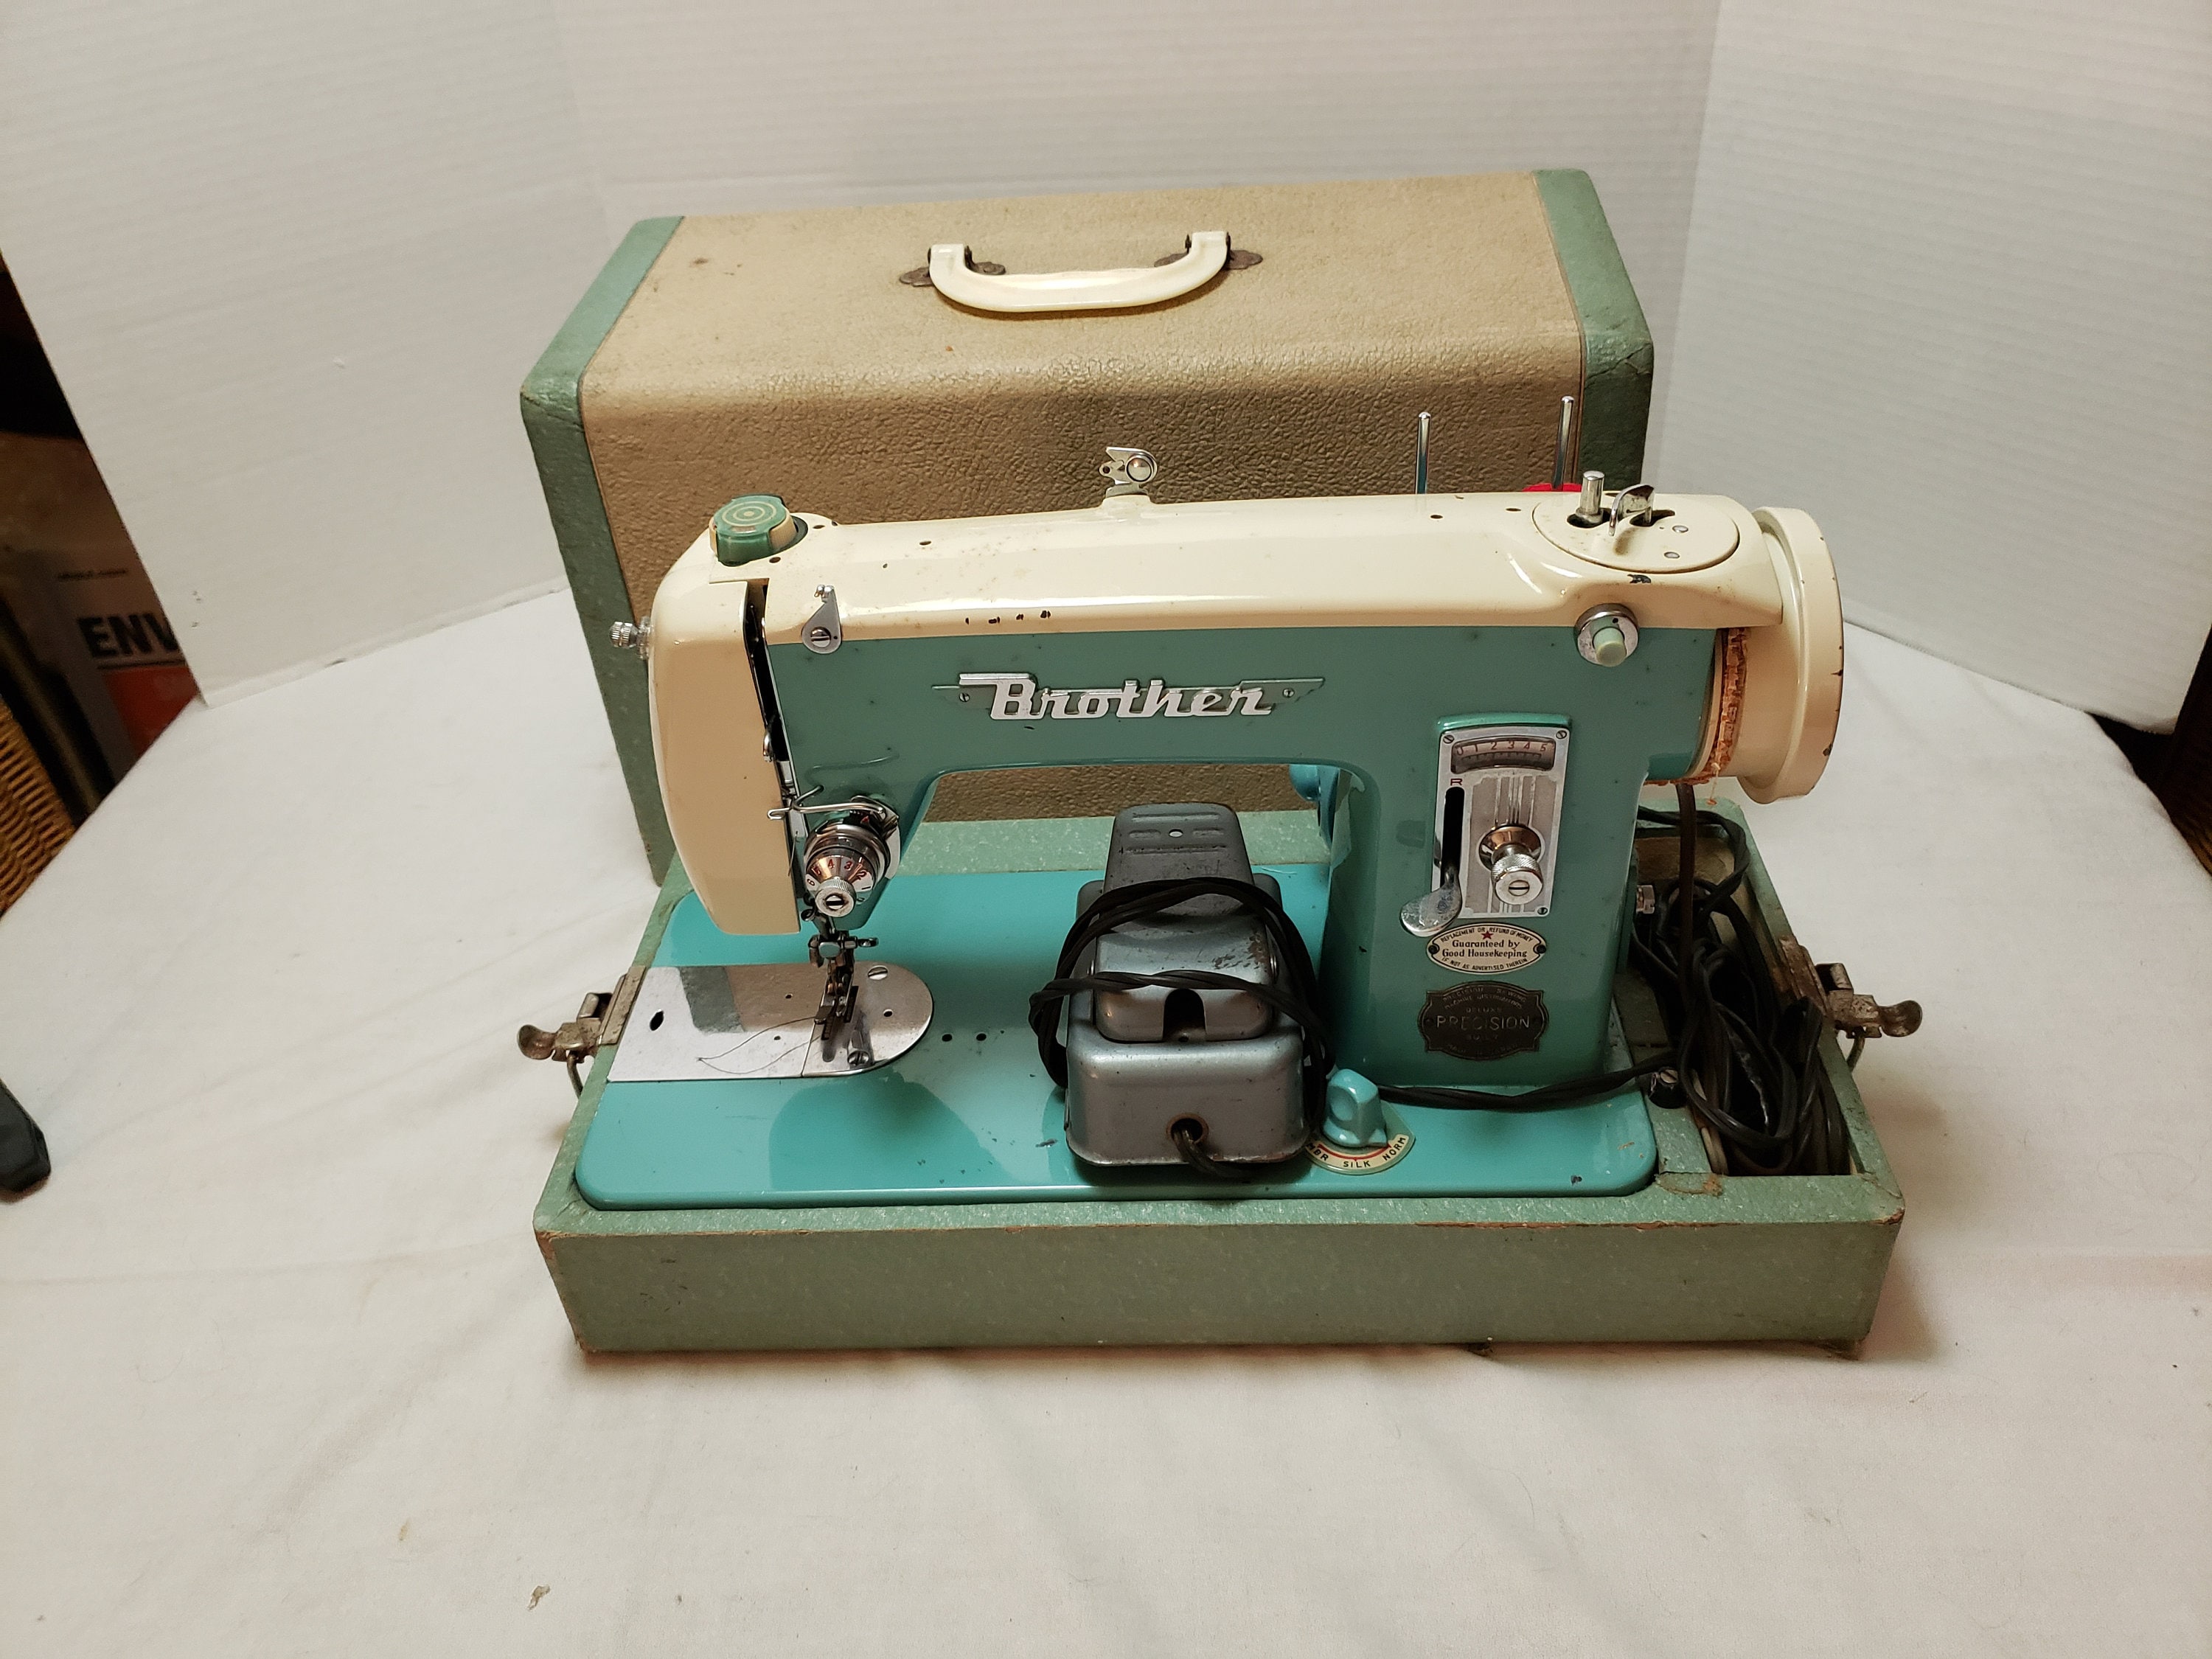 Vintage brother sewing machine : r/sewing